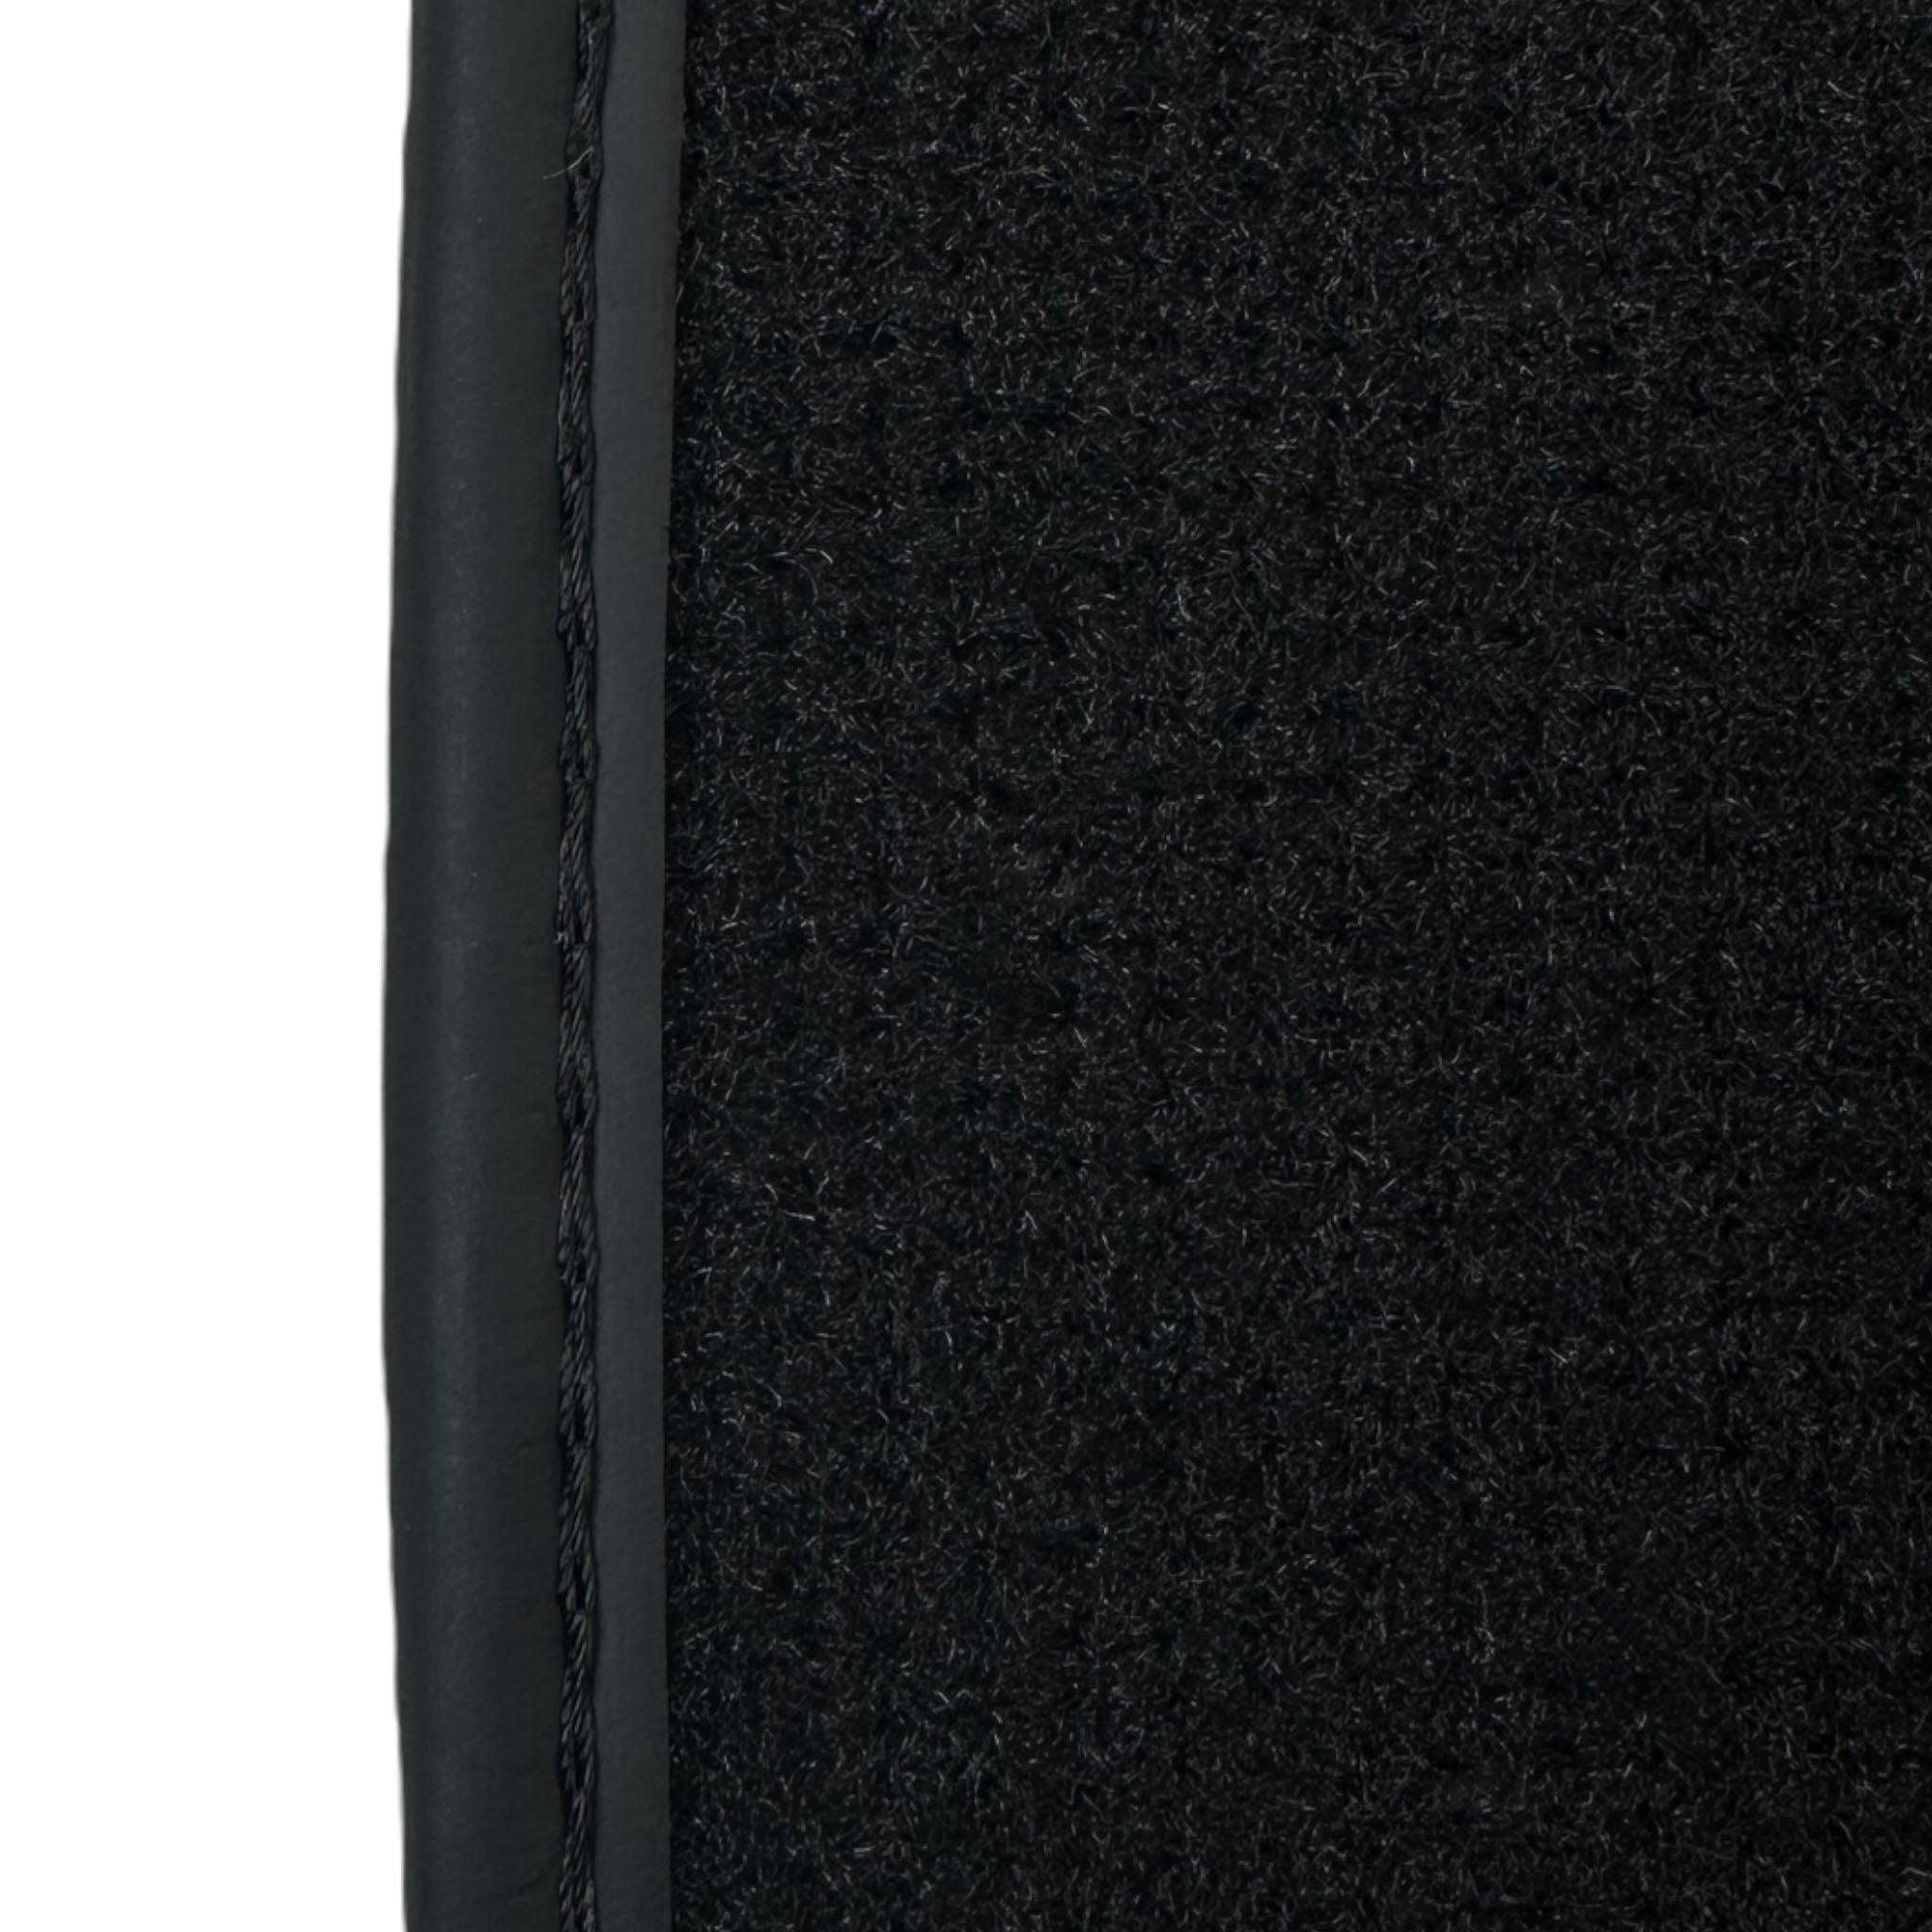 Black Floor Mats For BMW 3 Series E36 Convertible | Black Trim